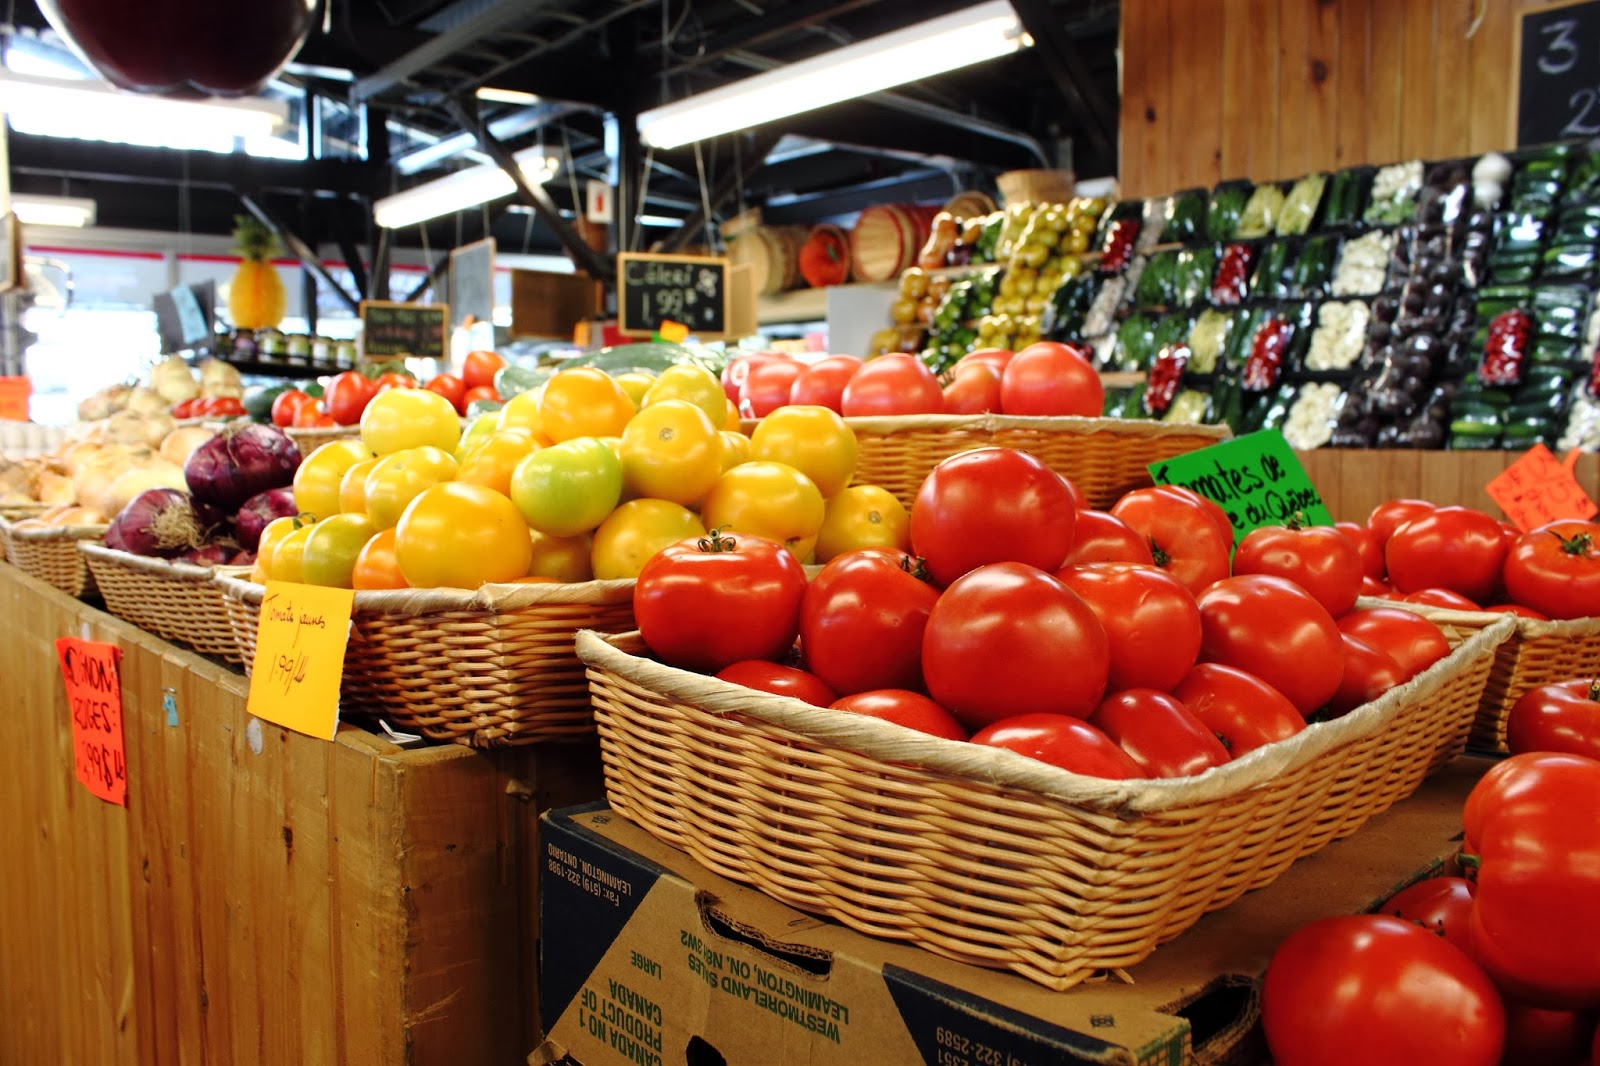 Tomatoes stimulate immune function